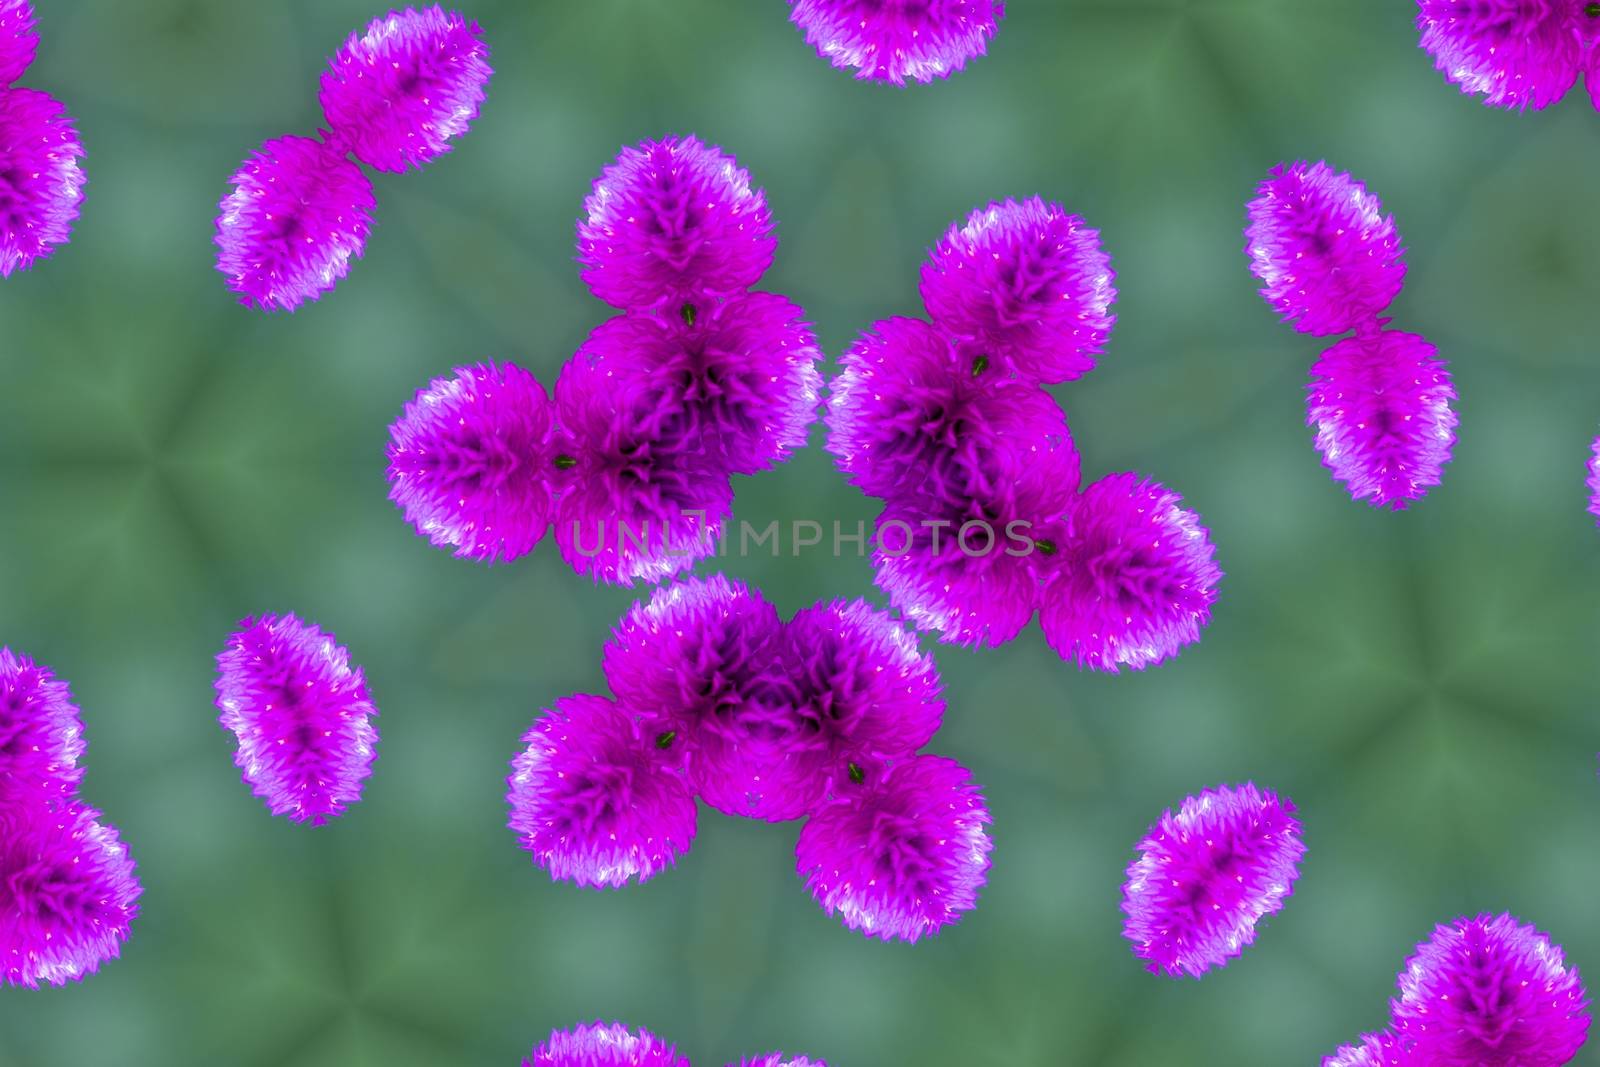 imagine purple virus picture on green background by peerapixs